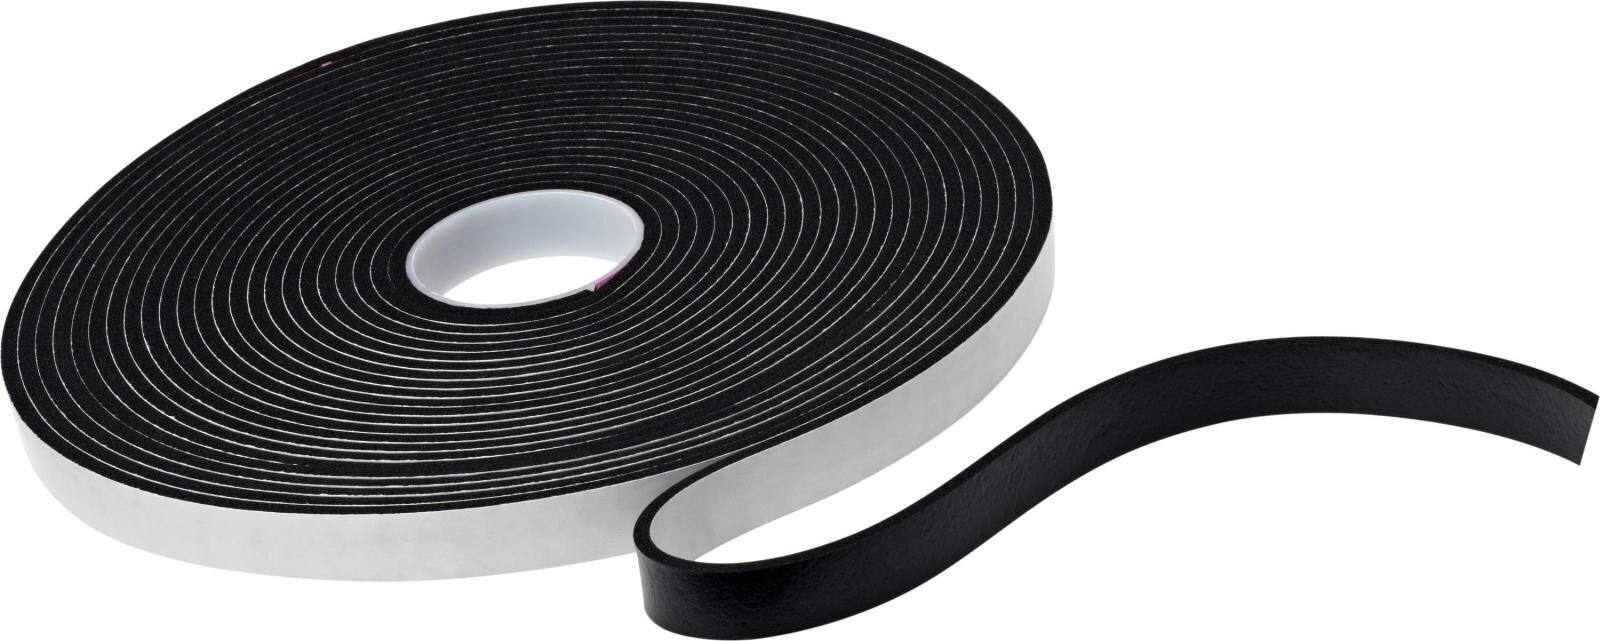 3M Single-sided vinyl foam adhesive tape 4714, black, 25 mm x 16.5 m, 6.4 mm